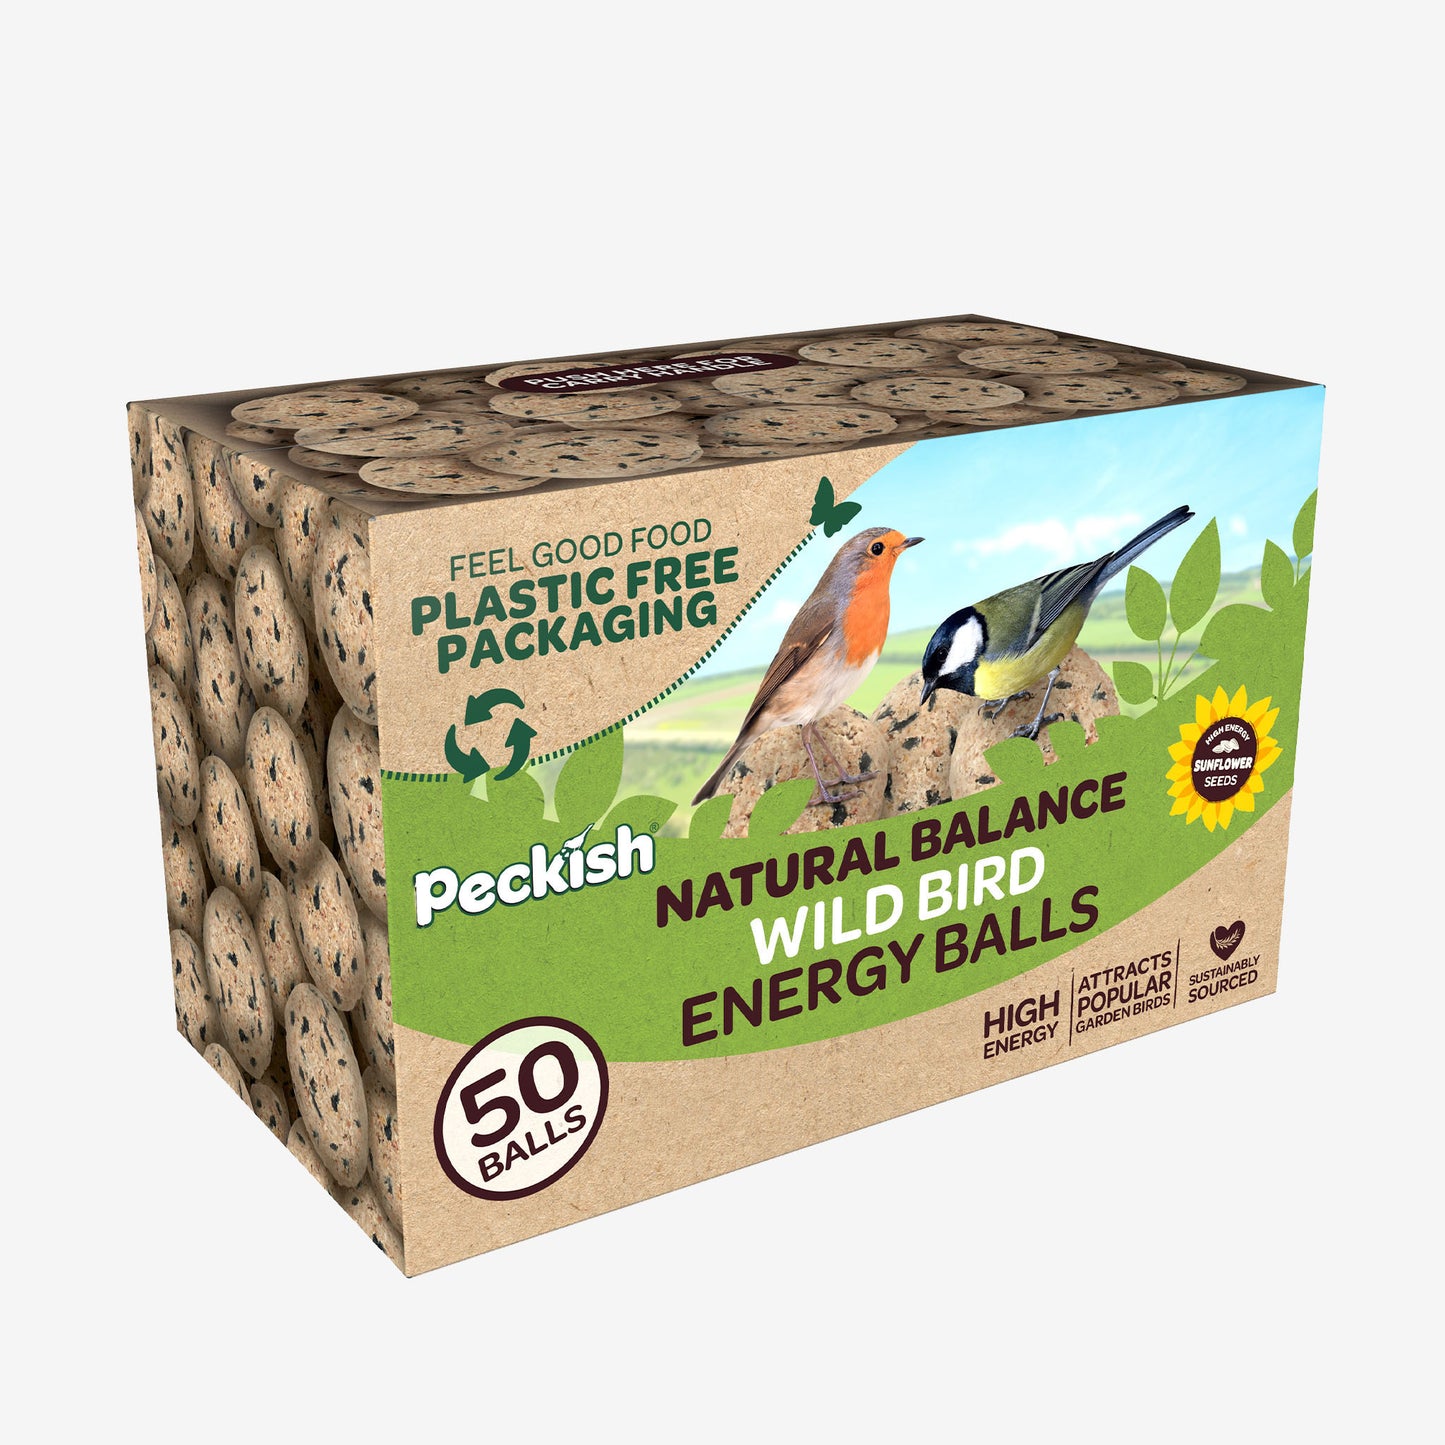 Peckish Natural Balance Energy Balls in box packaging